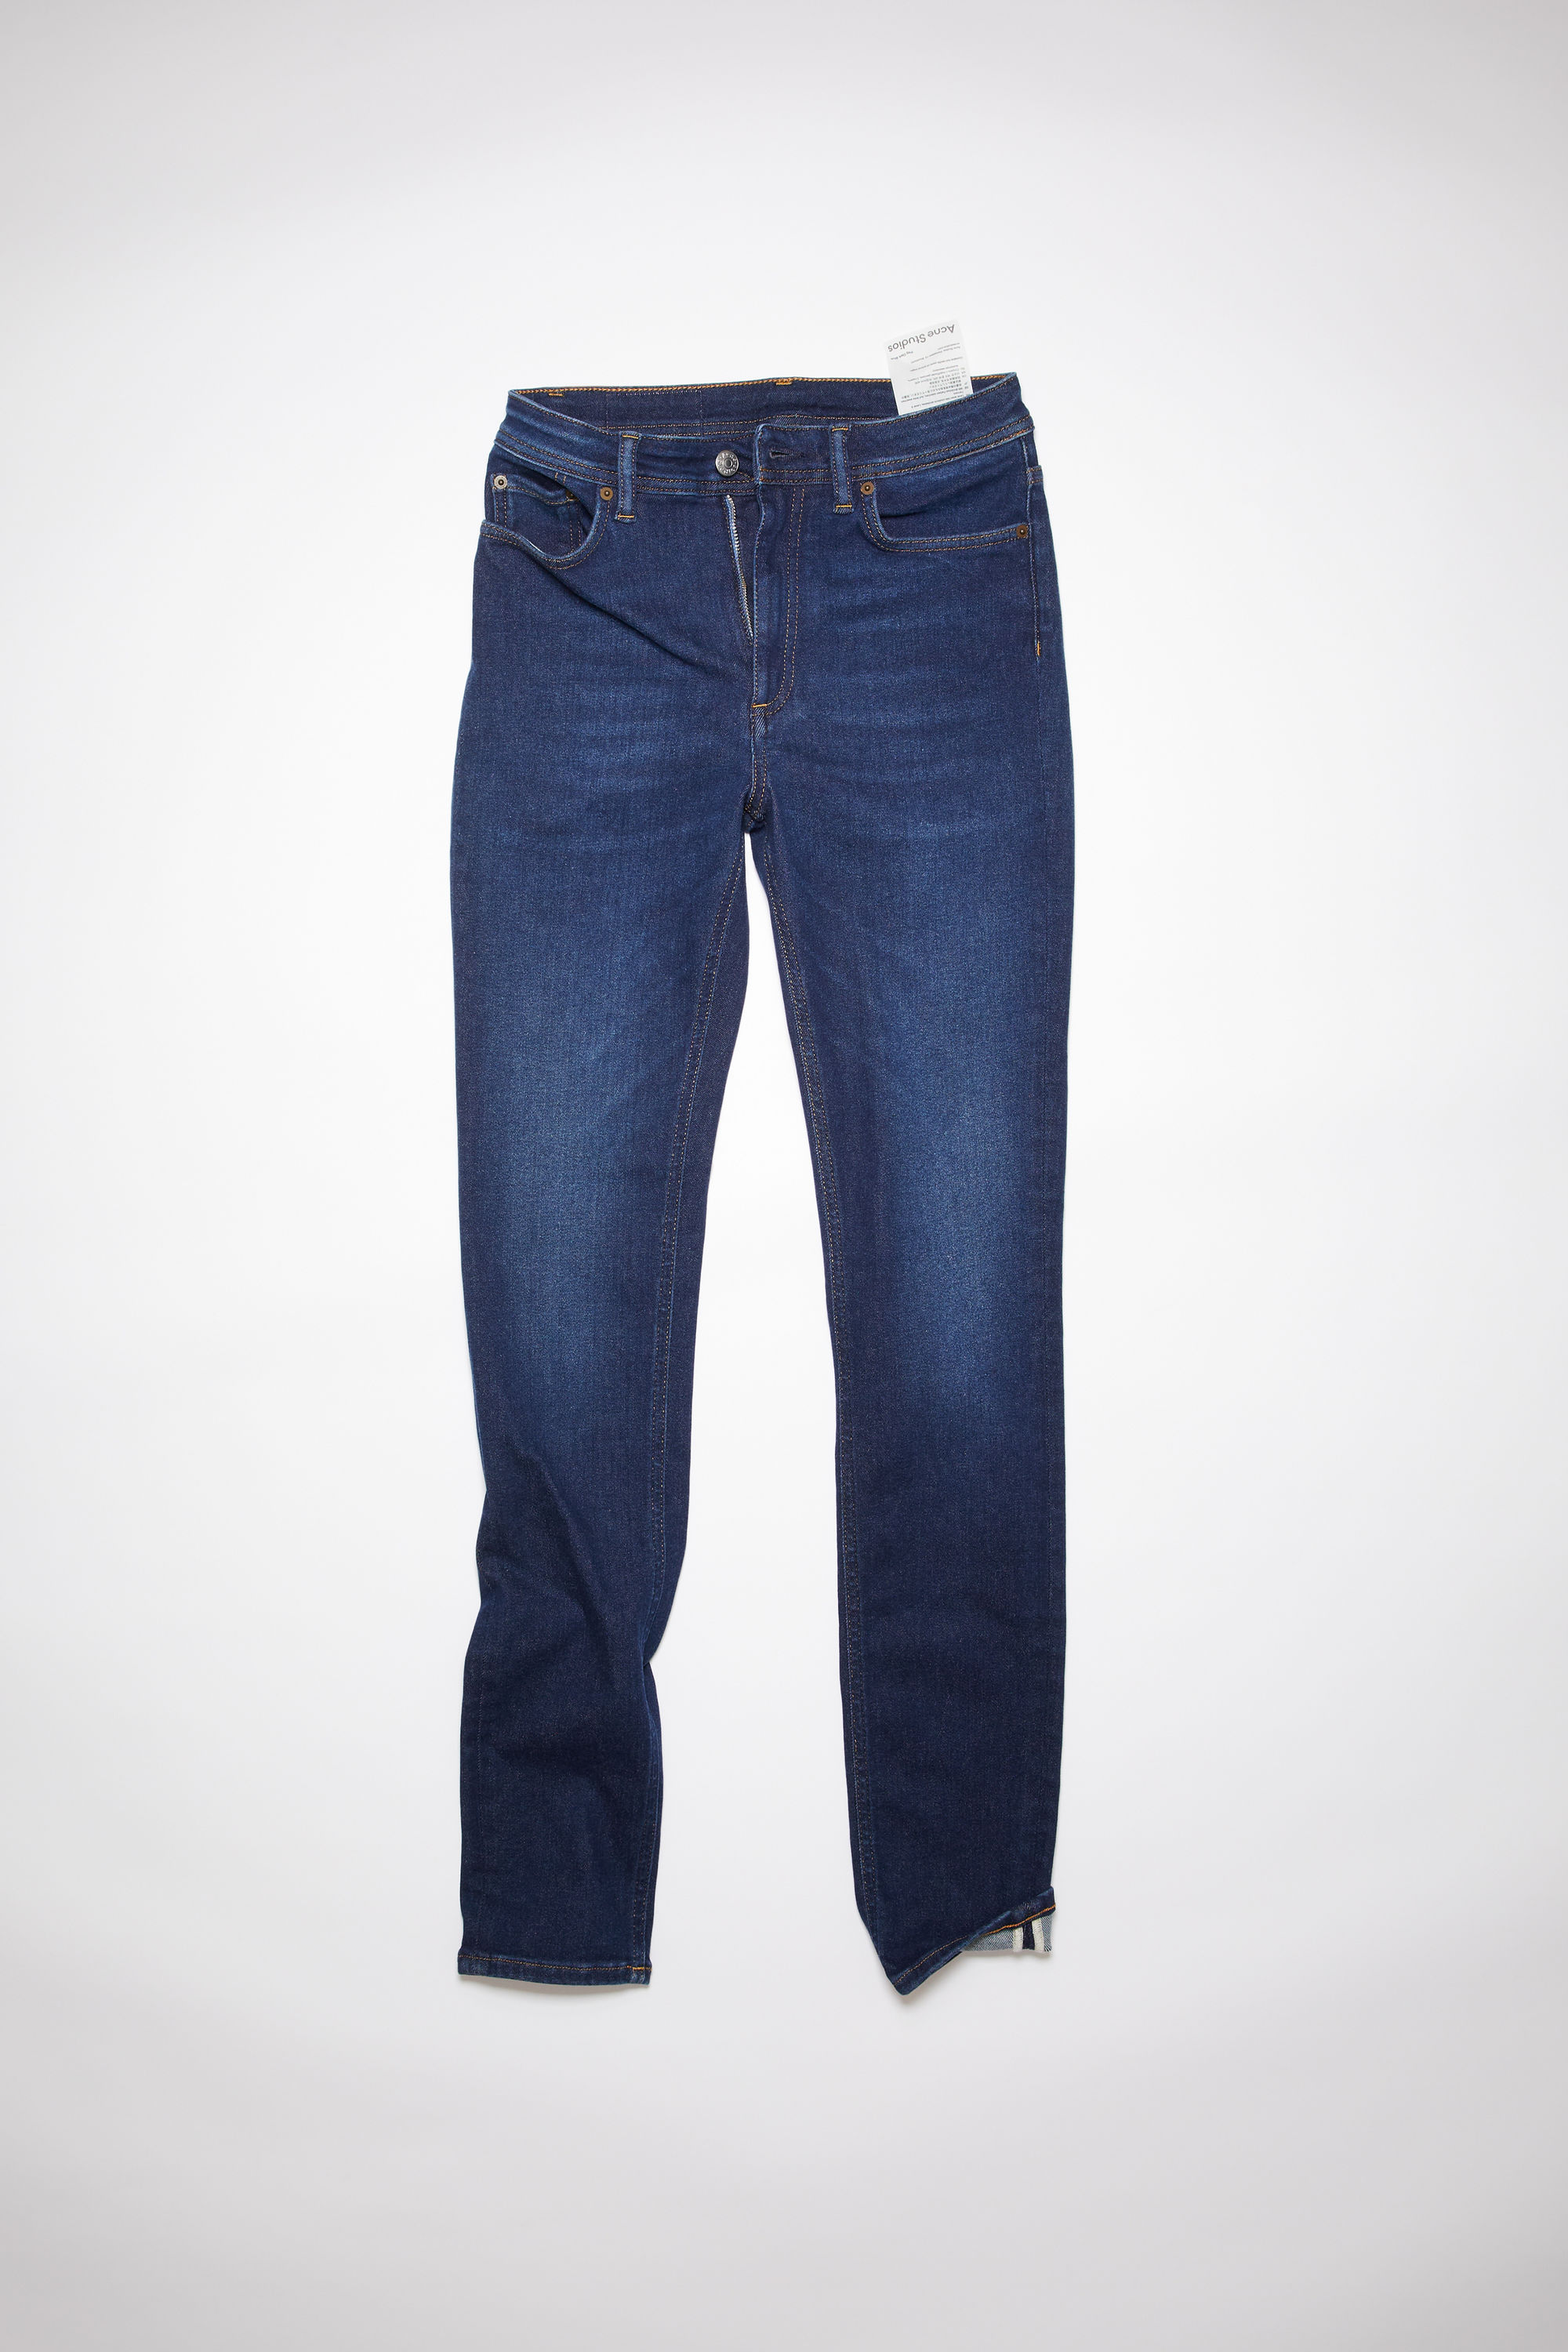 Acne Studios for Studios Indigo Color High-rise jeans | Shop